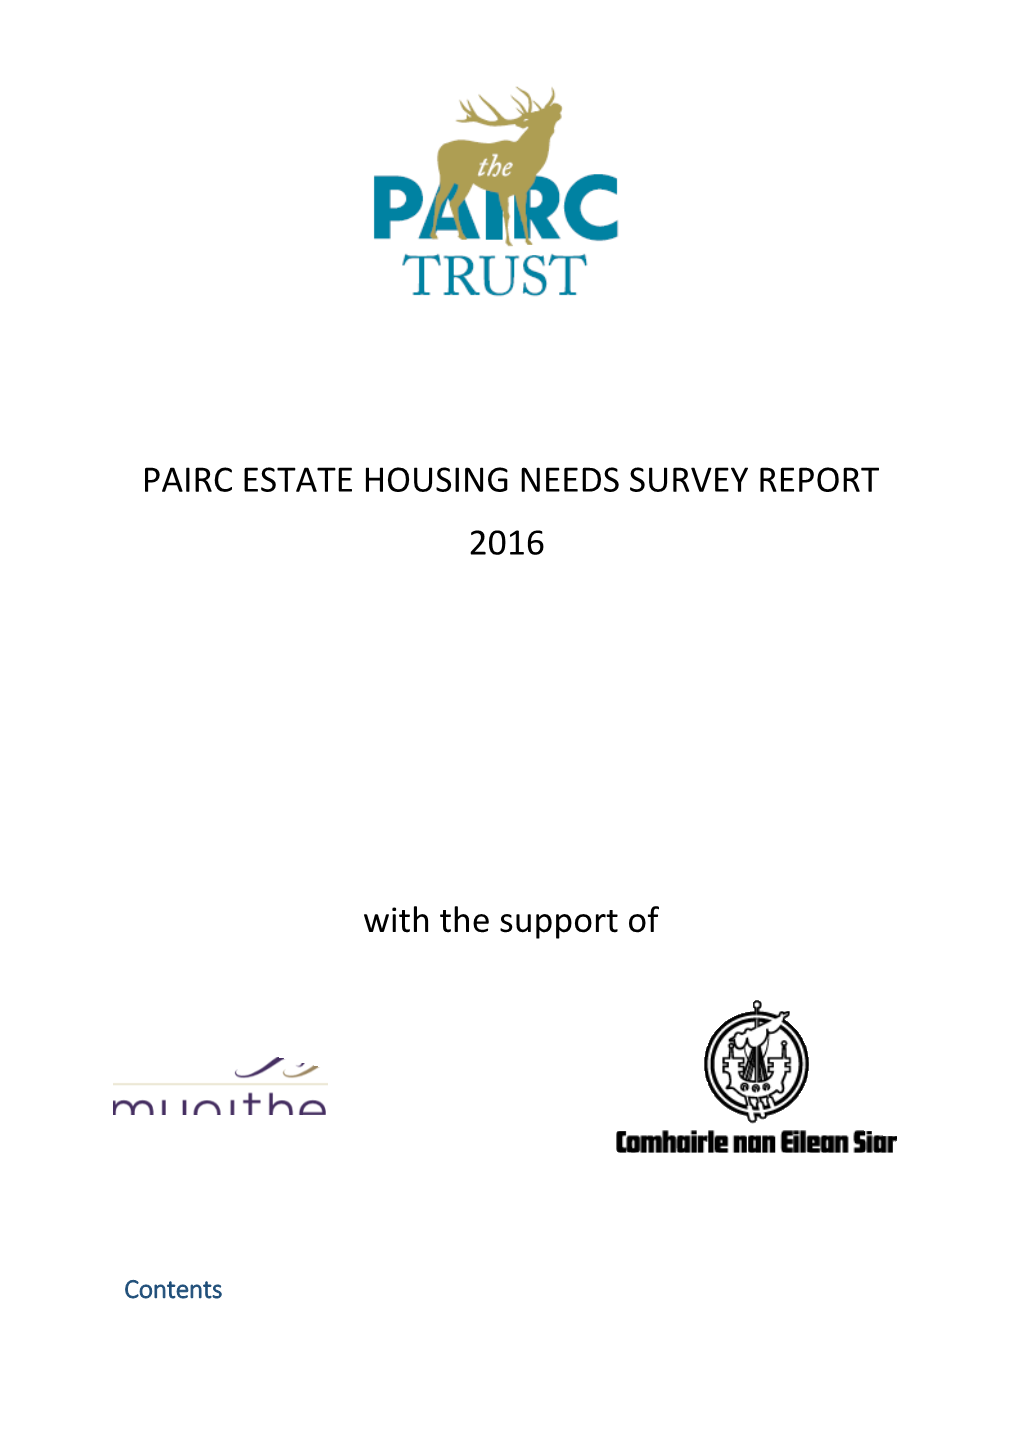 Pairc Trust Housing Needs Survey Report 2016